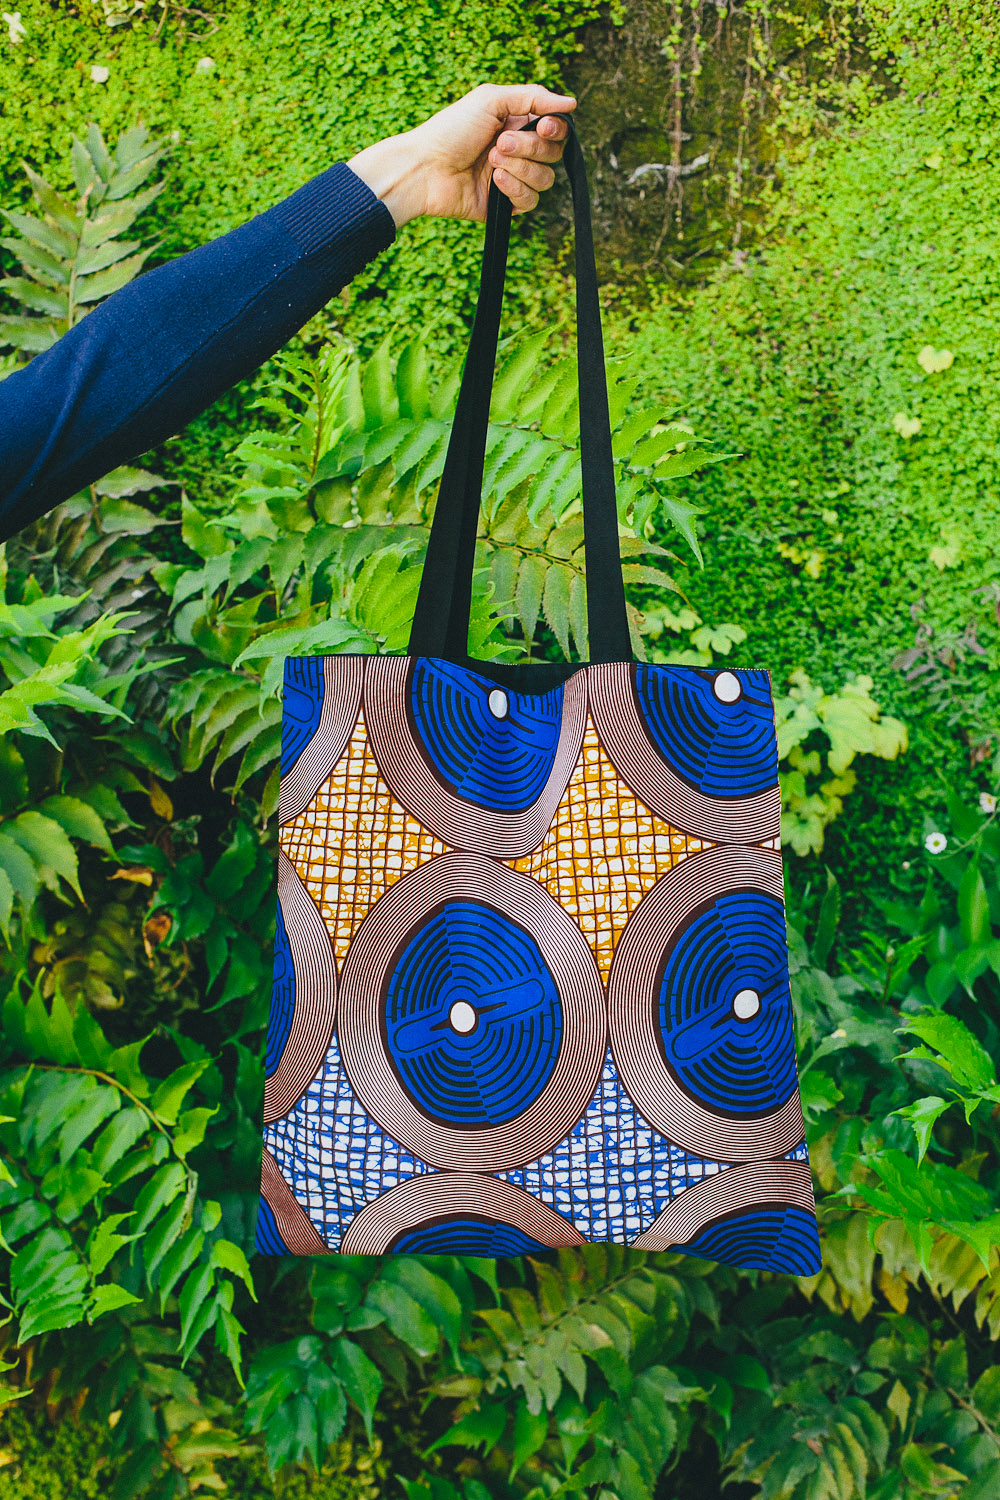 Sac Tote BAG en tissus africain WAX, motifs cercles bleus